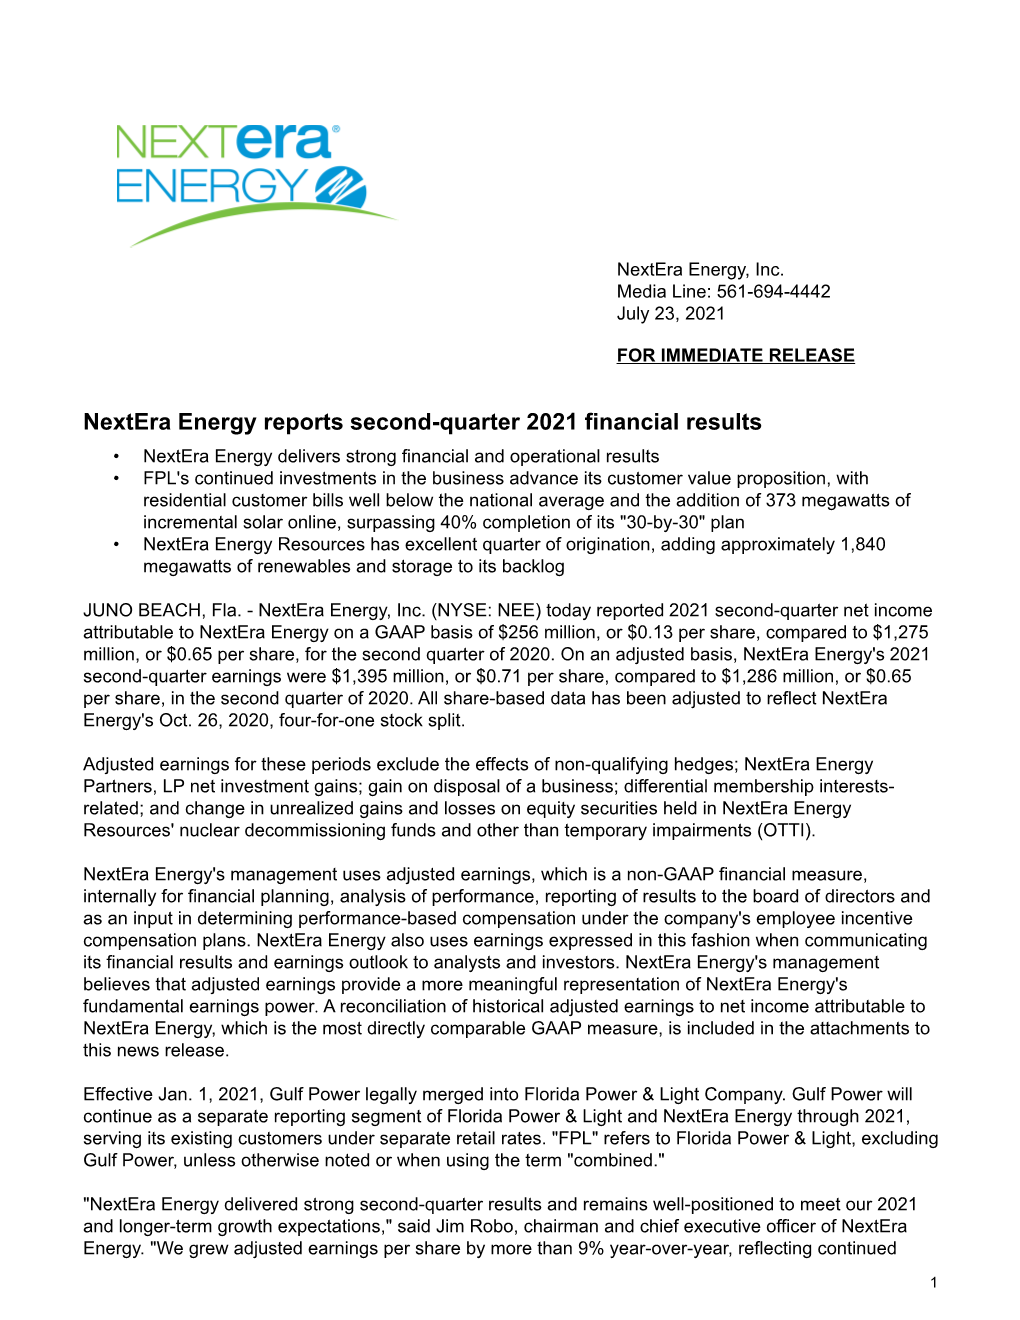 Nextera Energy Reports Second-Quarter 2021 Financial Results